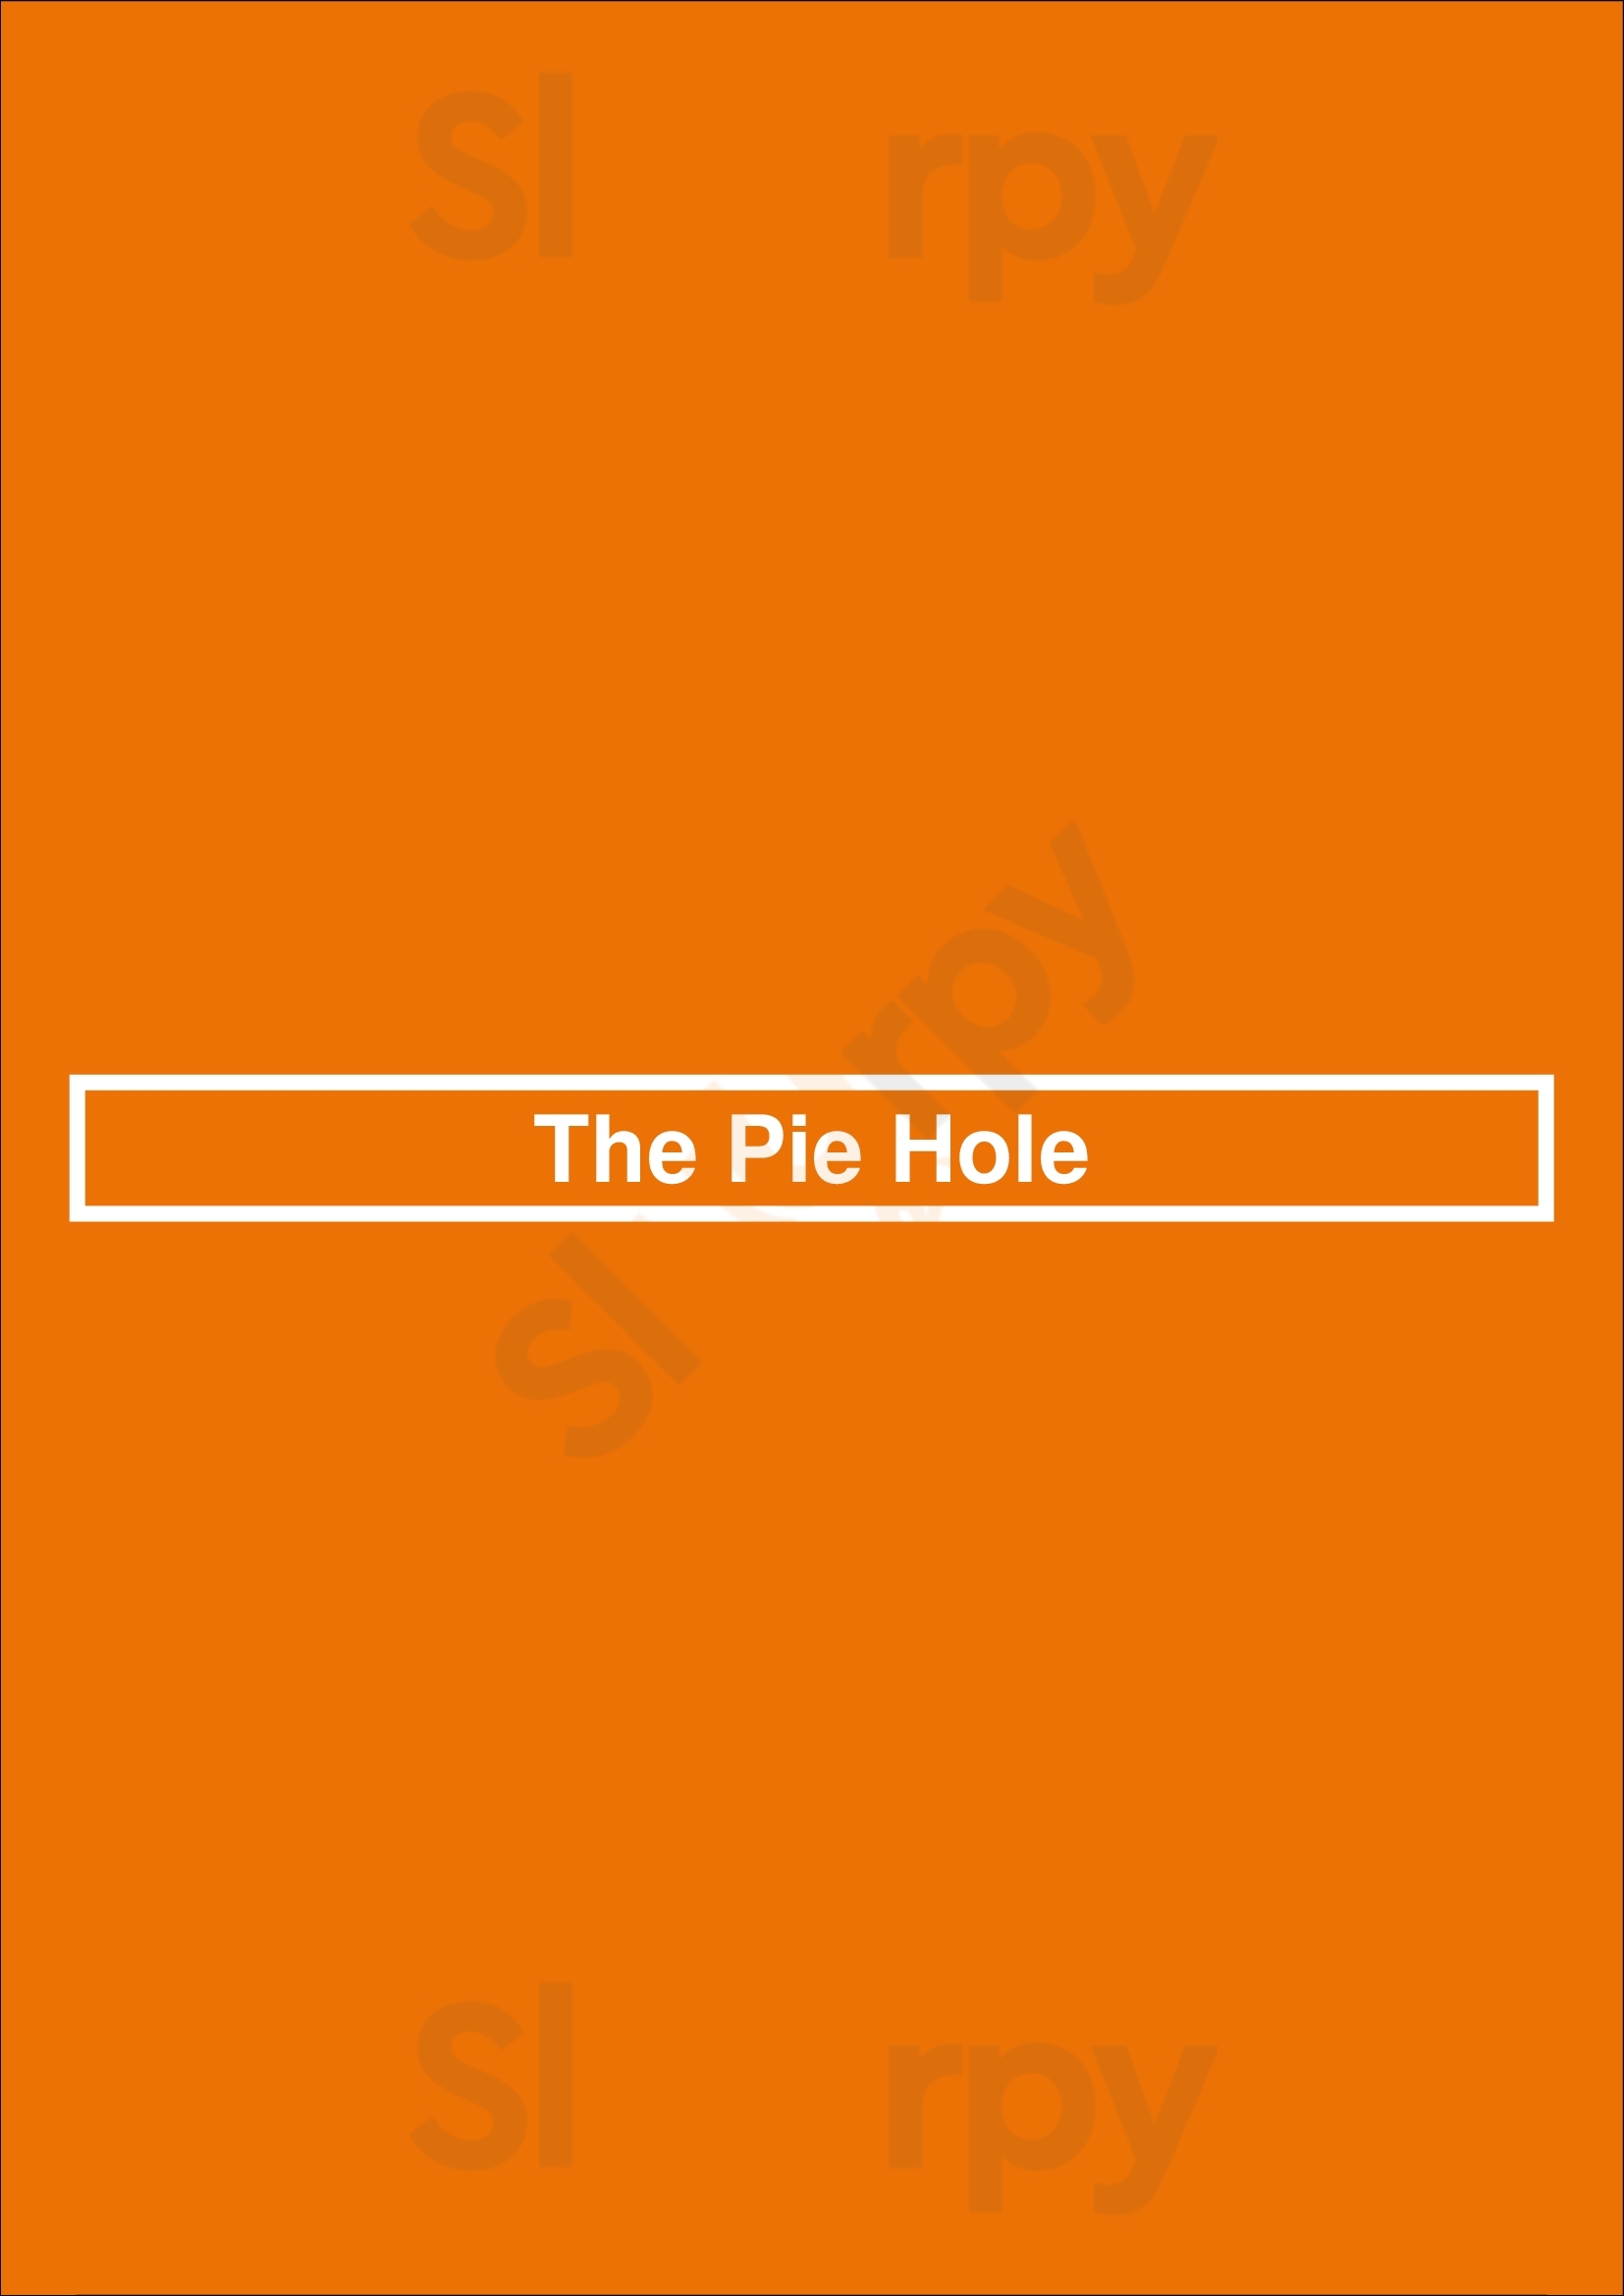 The Pie Hole Los Angeles Menu - 1